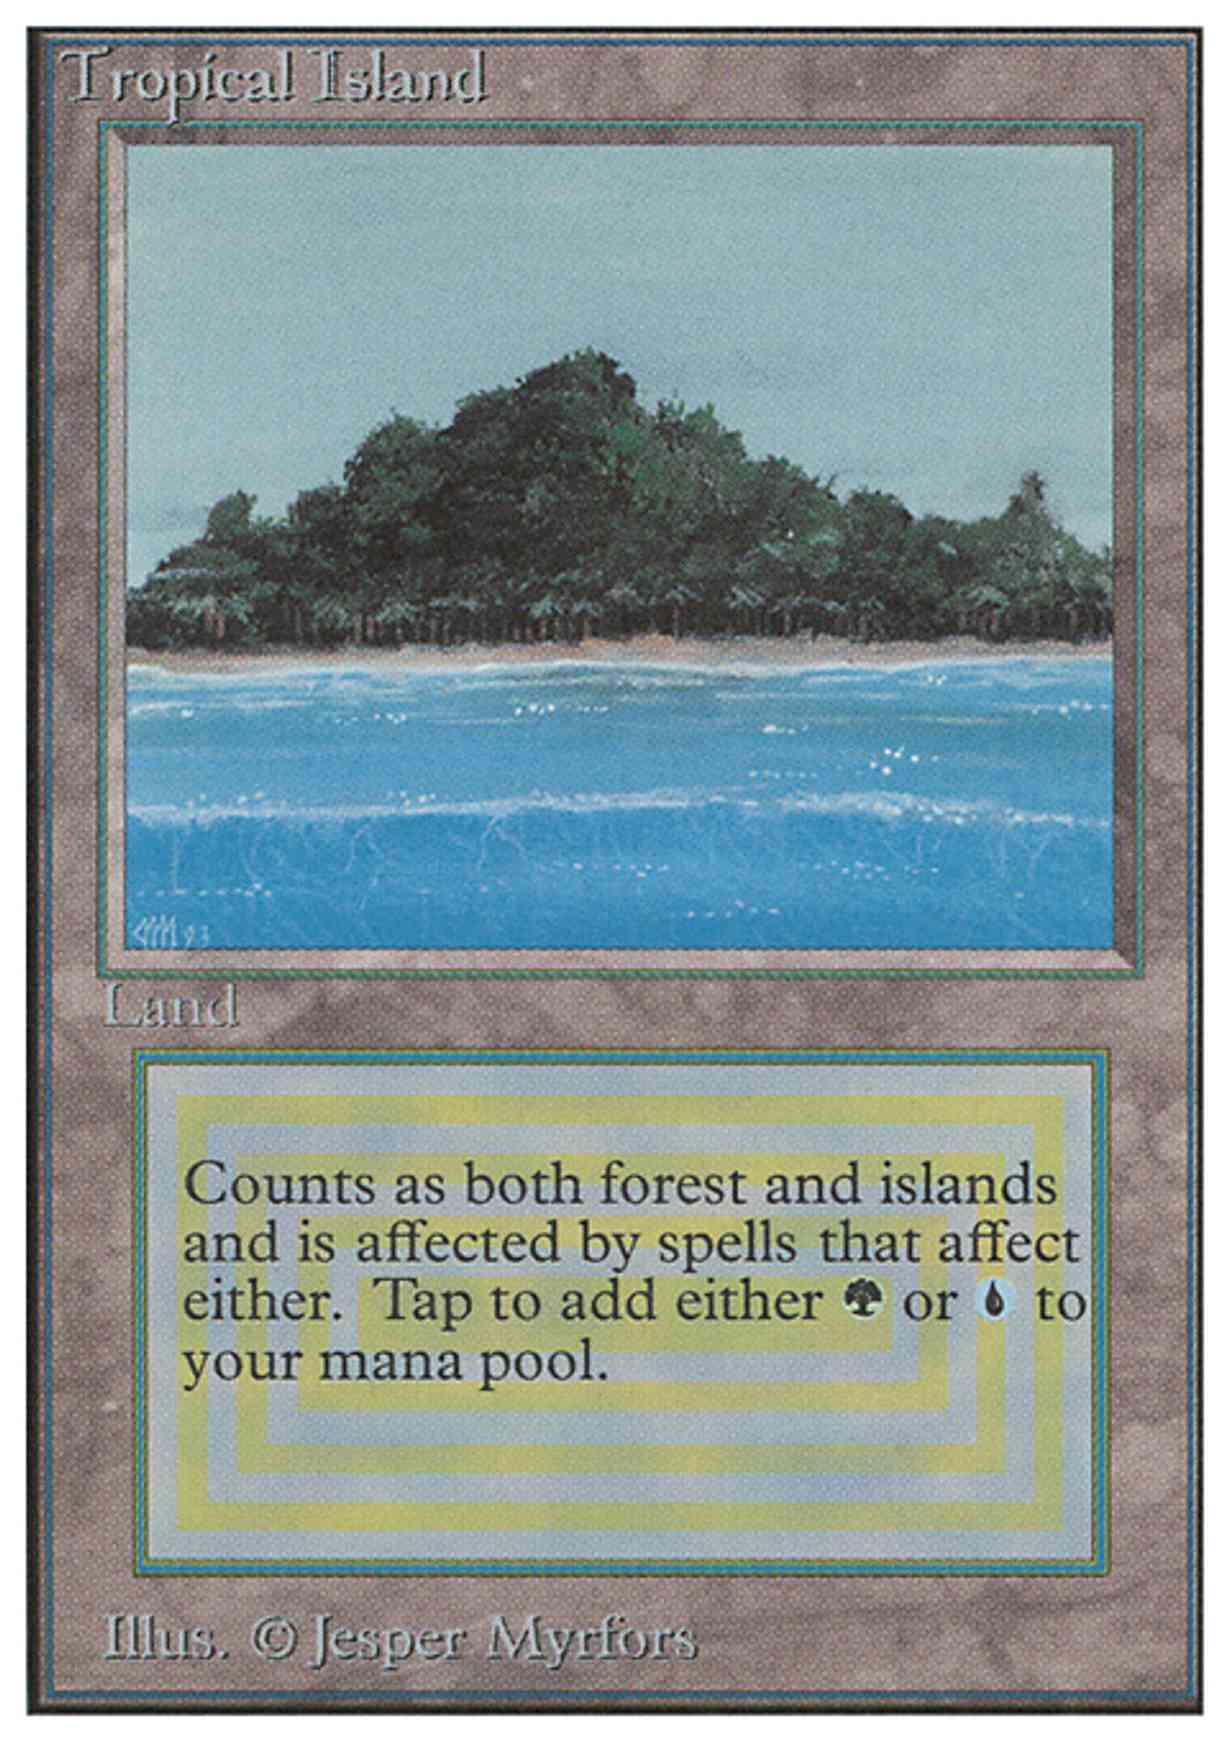 Tropical Island magic card front